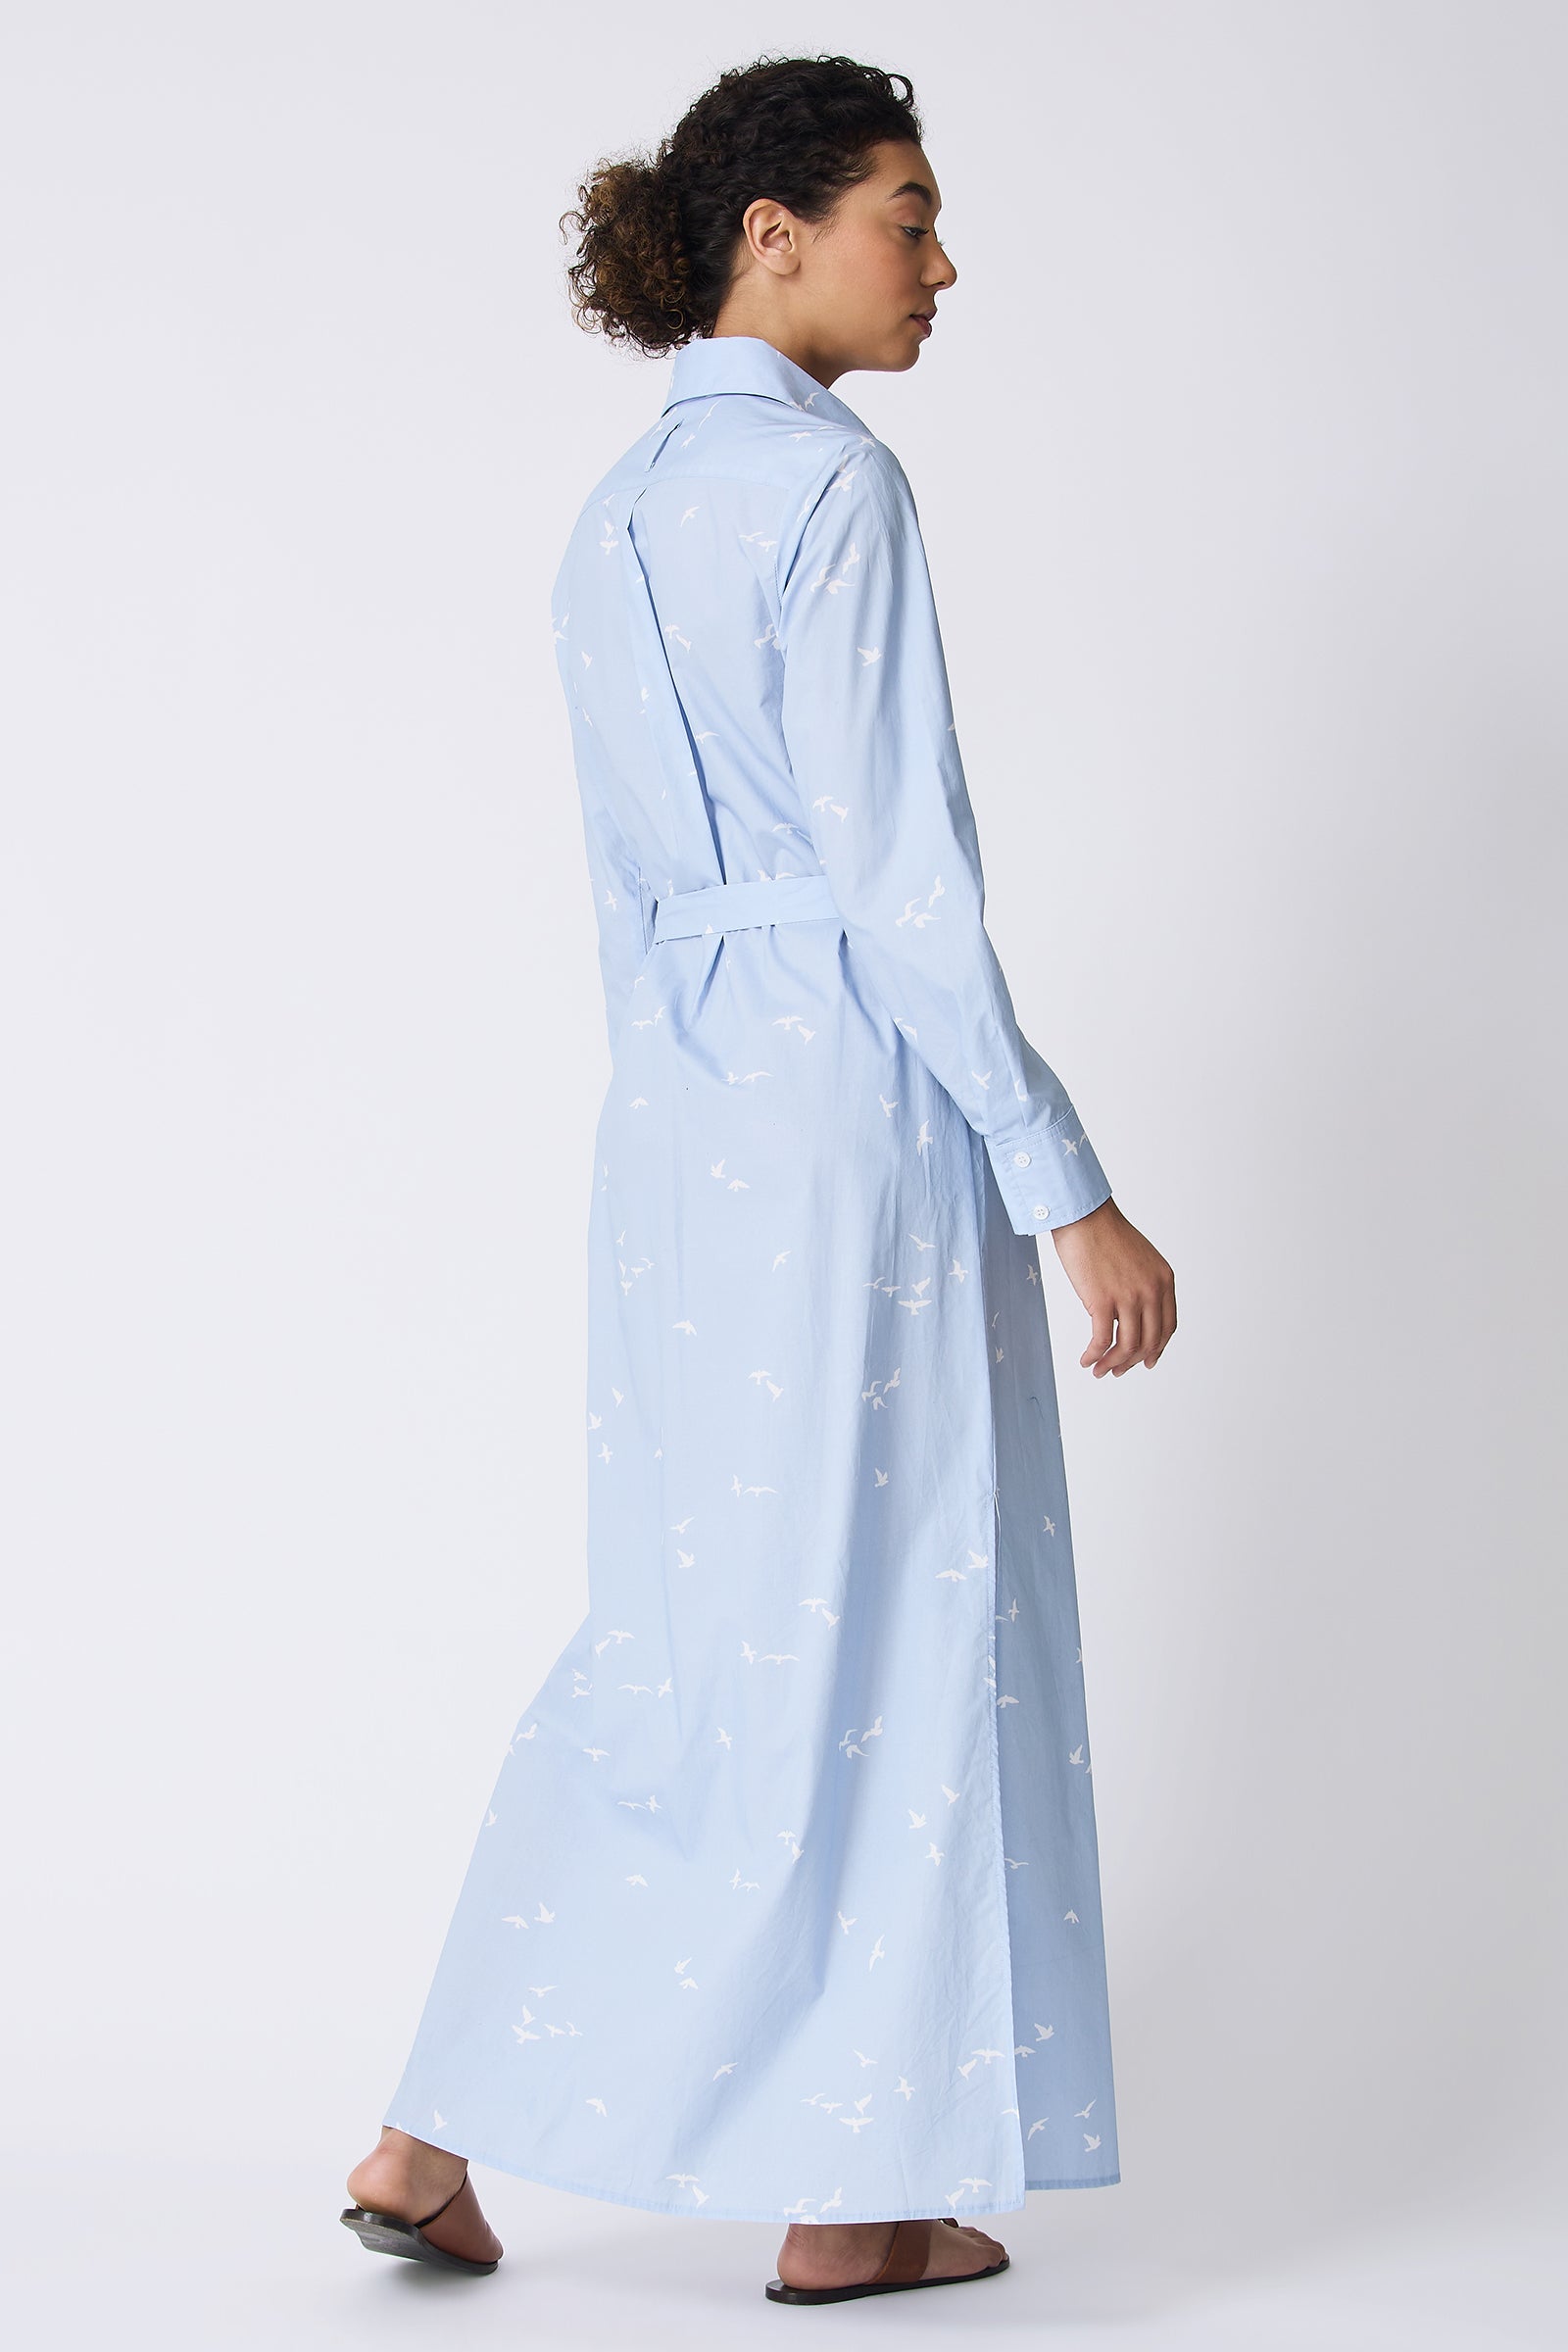 Kal Rieman June Maxi Dress in Oxford Blue Bird Print on model full back view